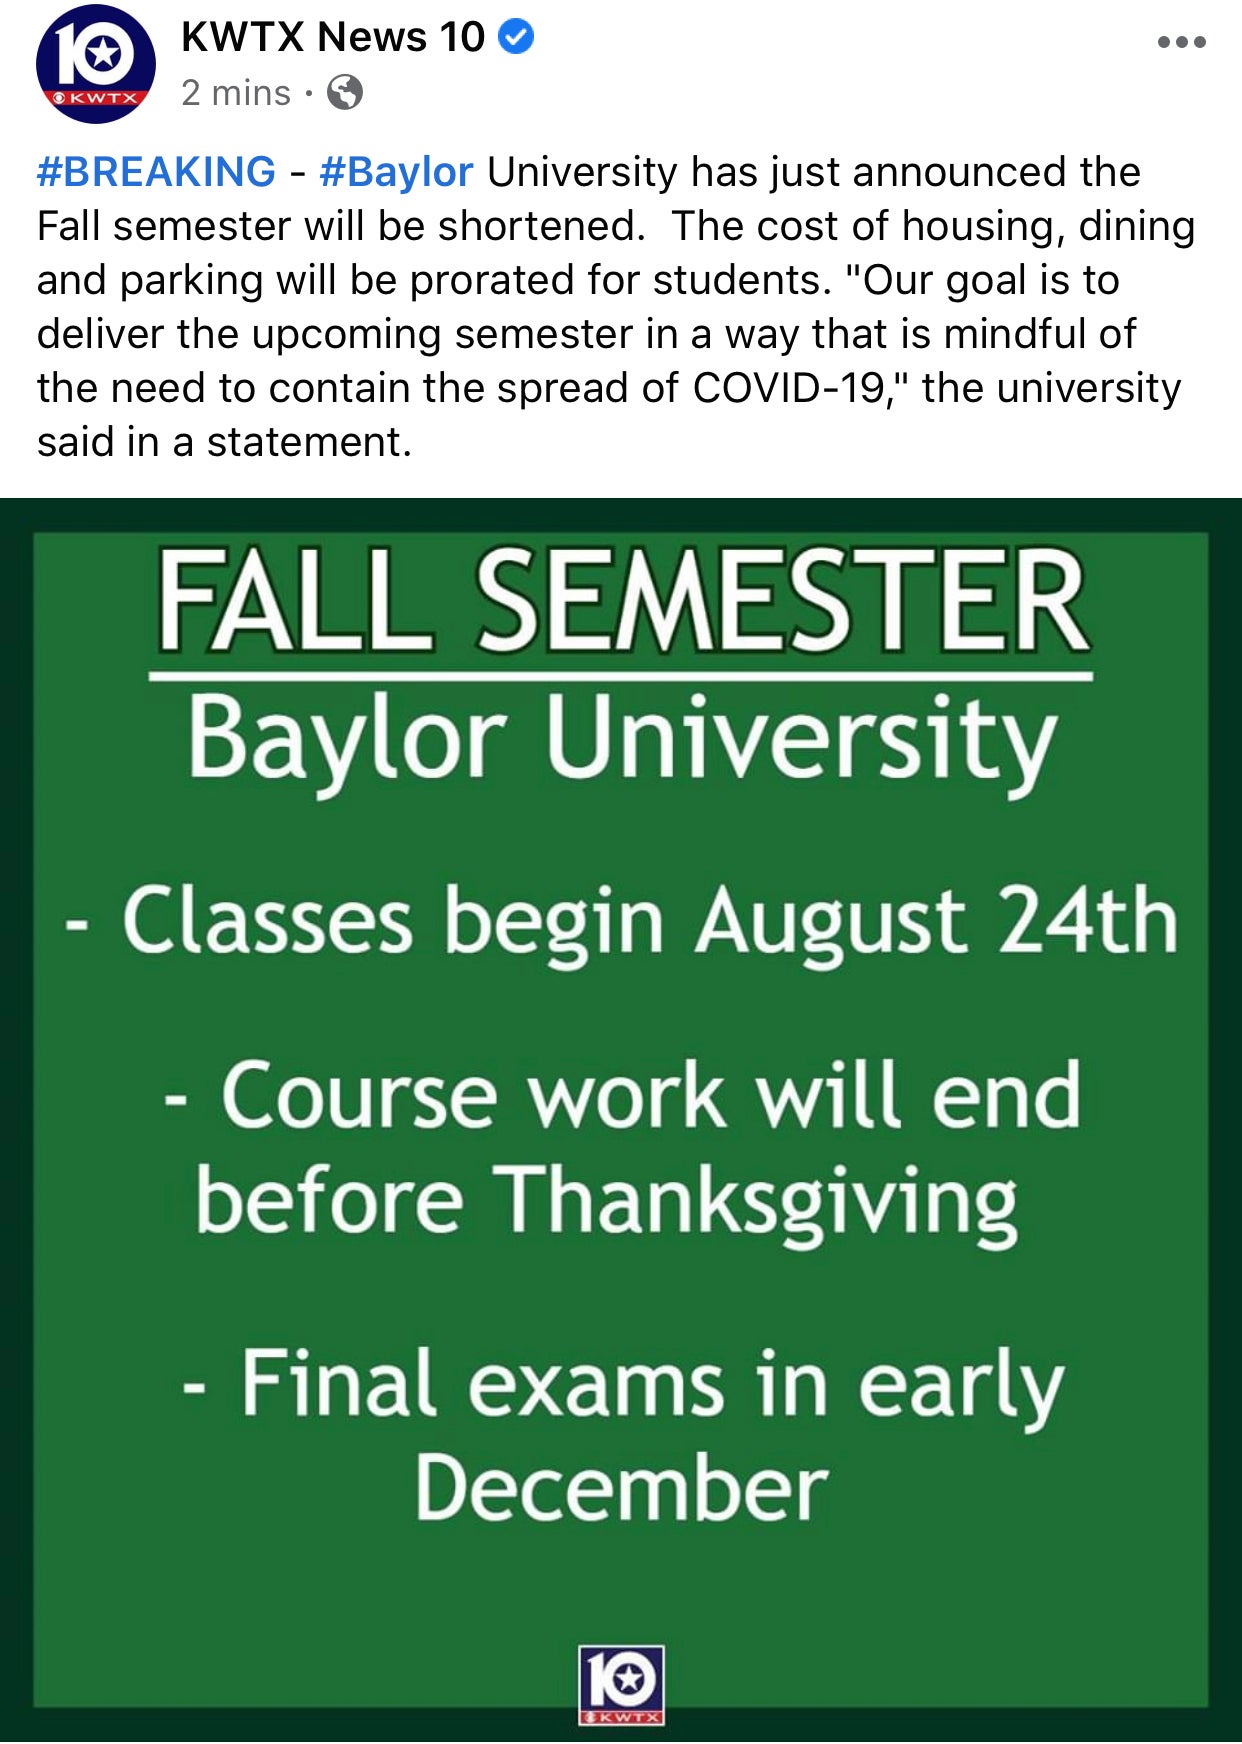 Baylor announces Fall Semester plans